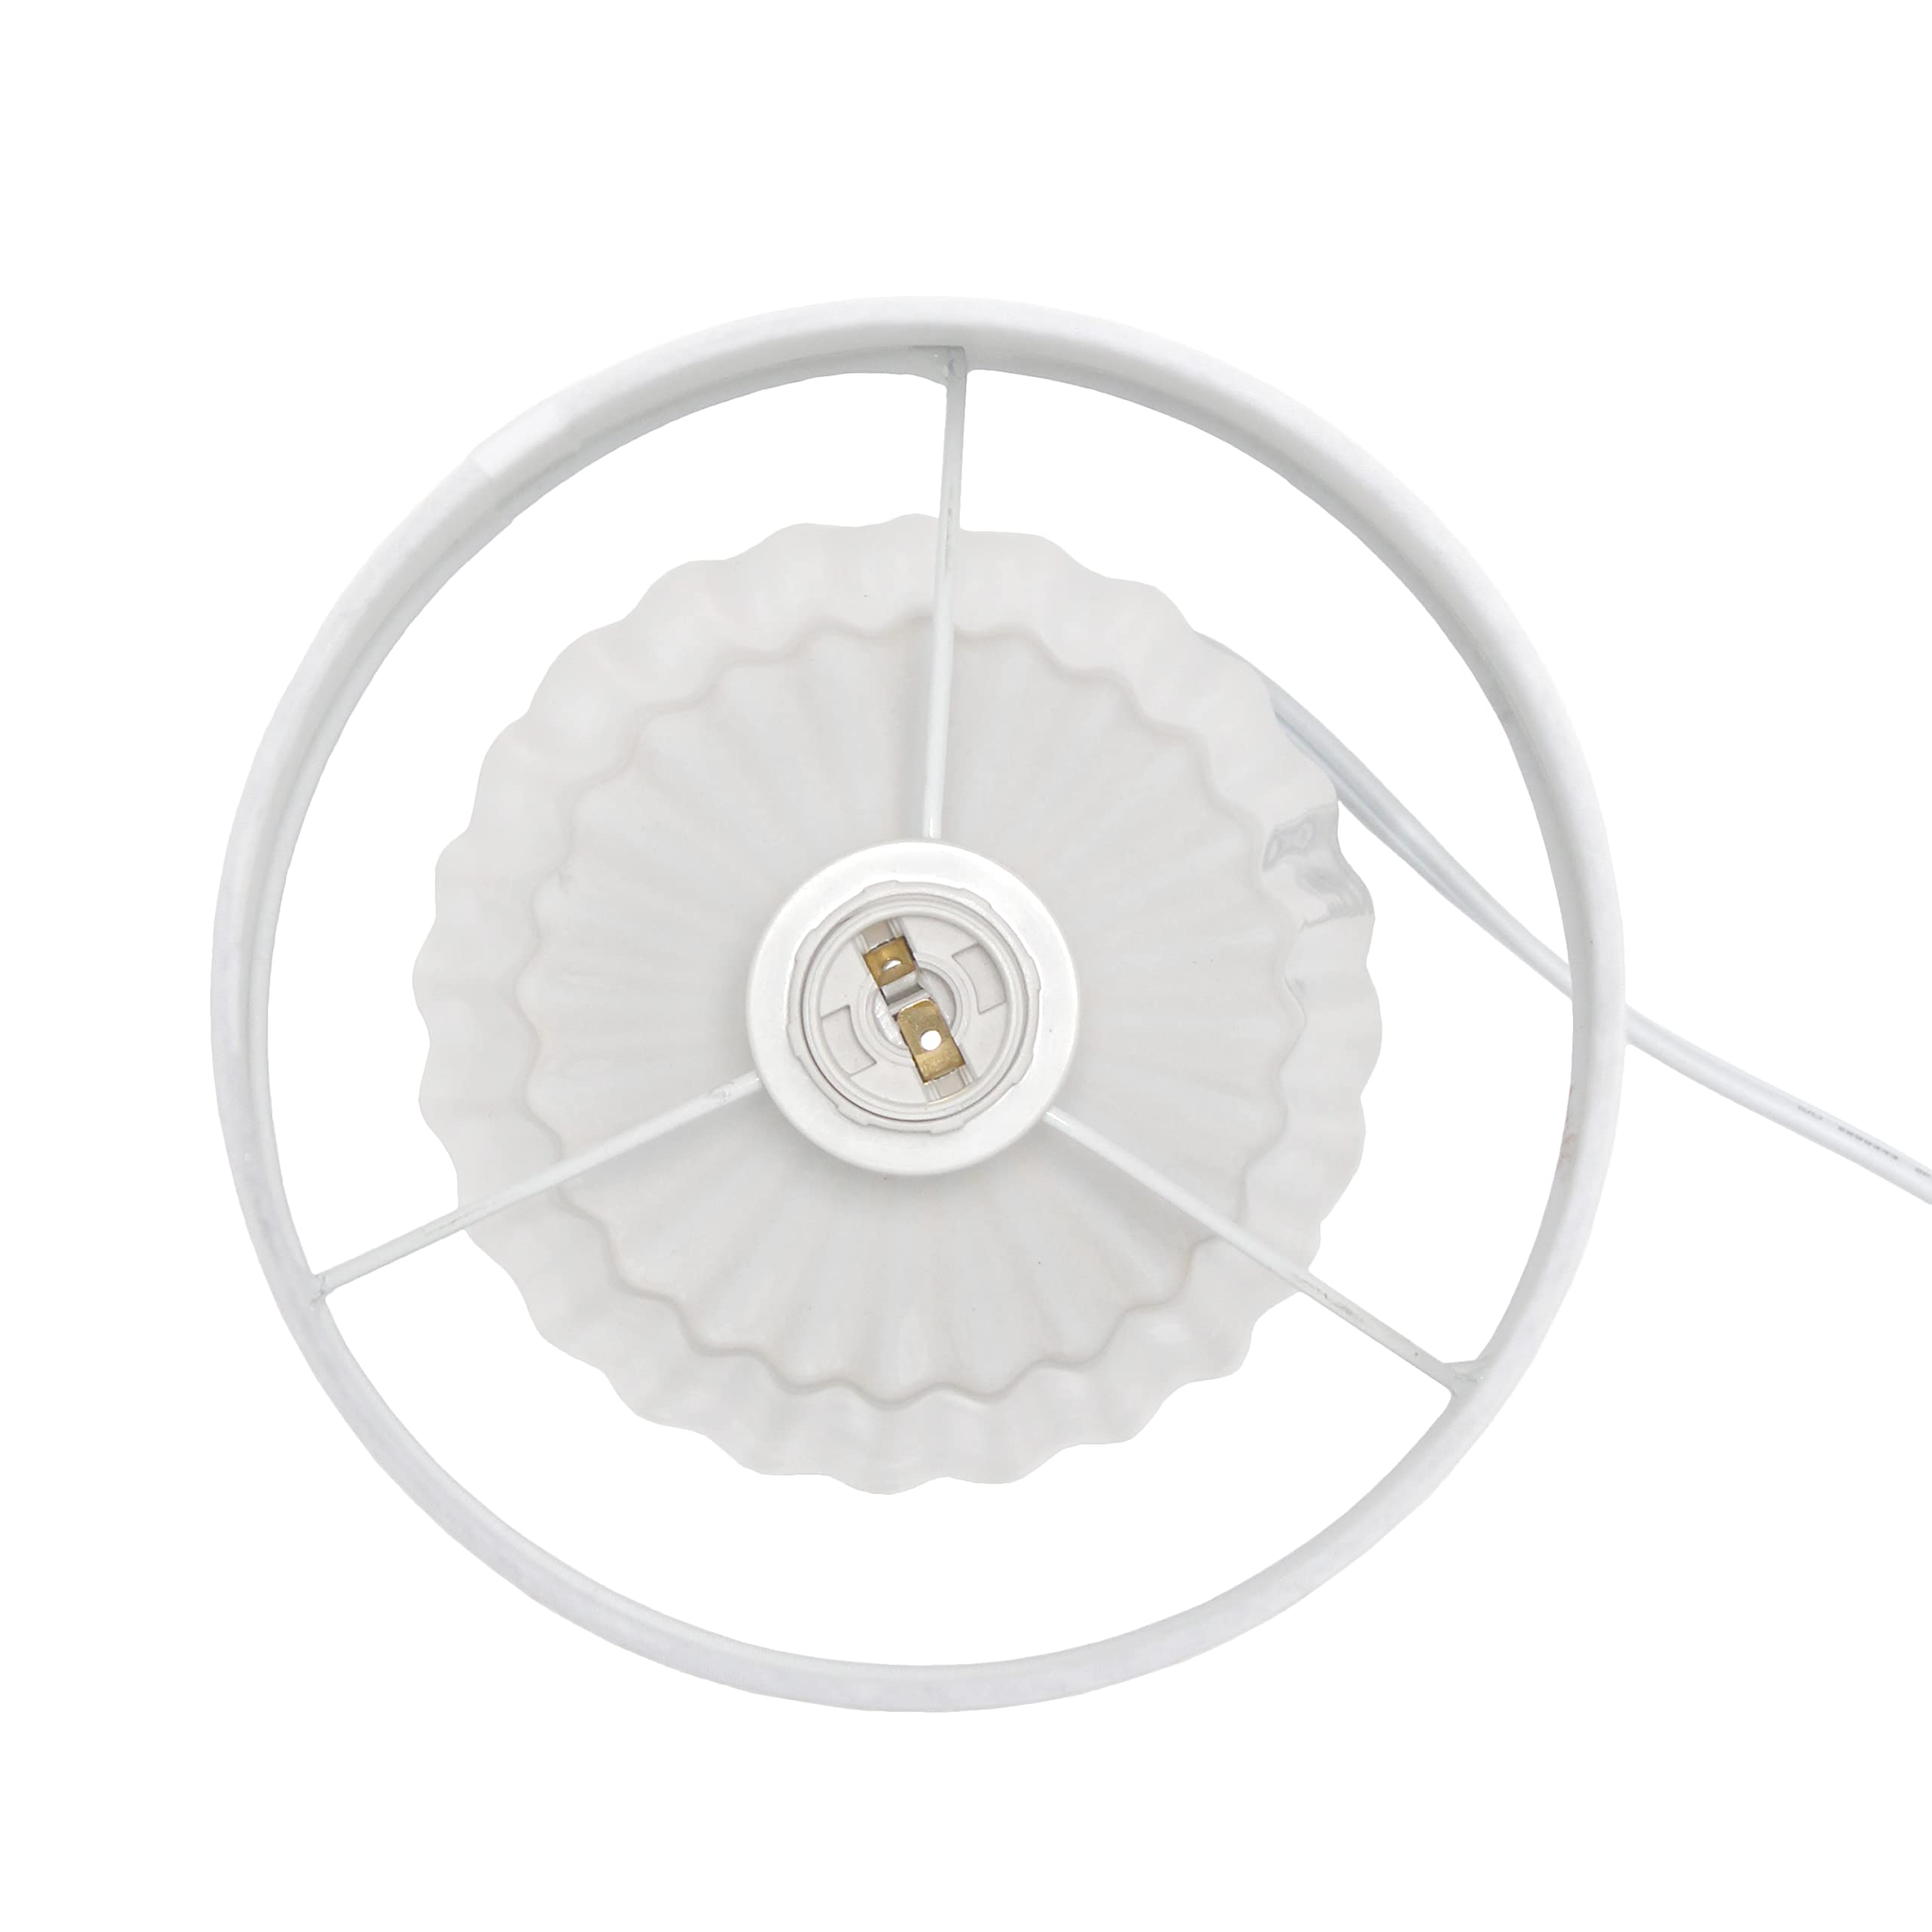 Simple Designs LT1120-OFF Petite Mini Pleated English Ceramic Base Table Lamp, Off White